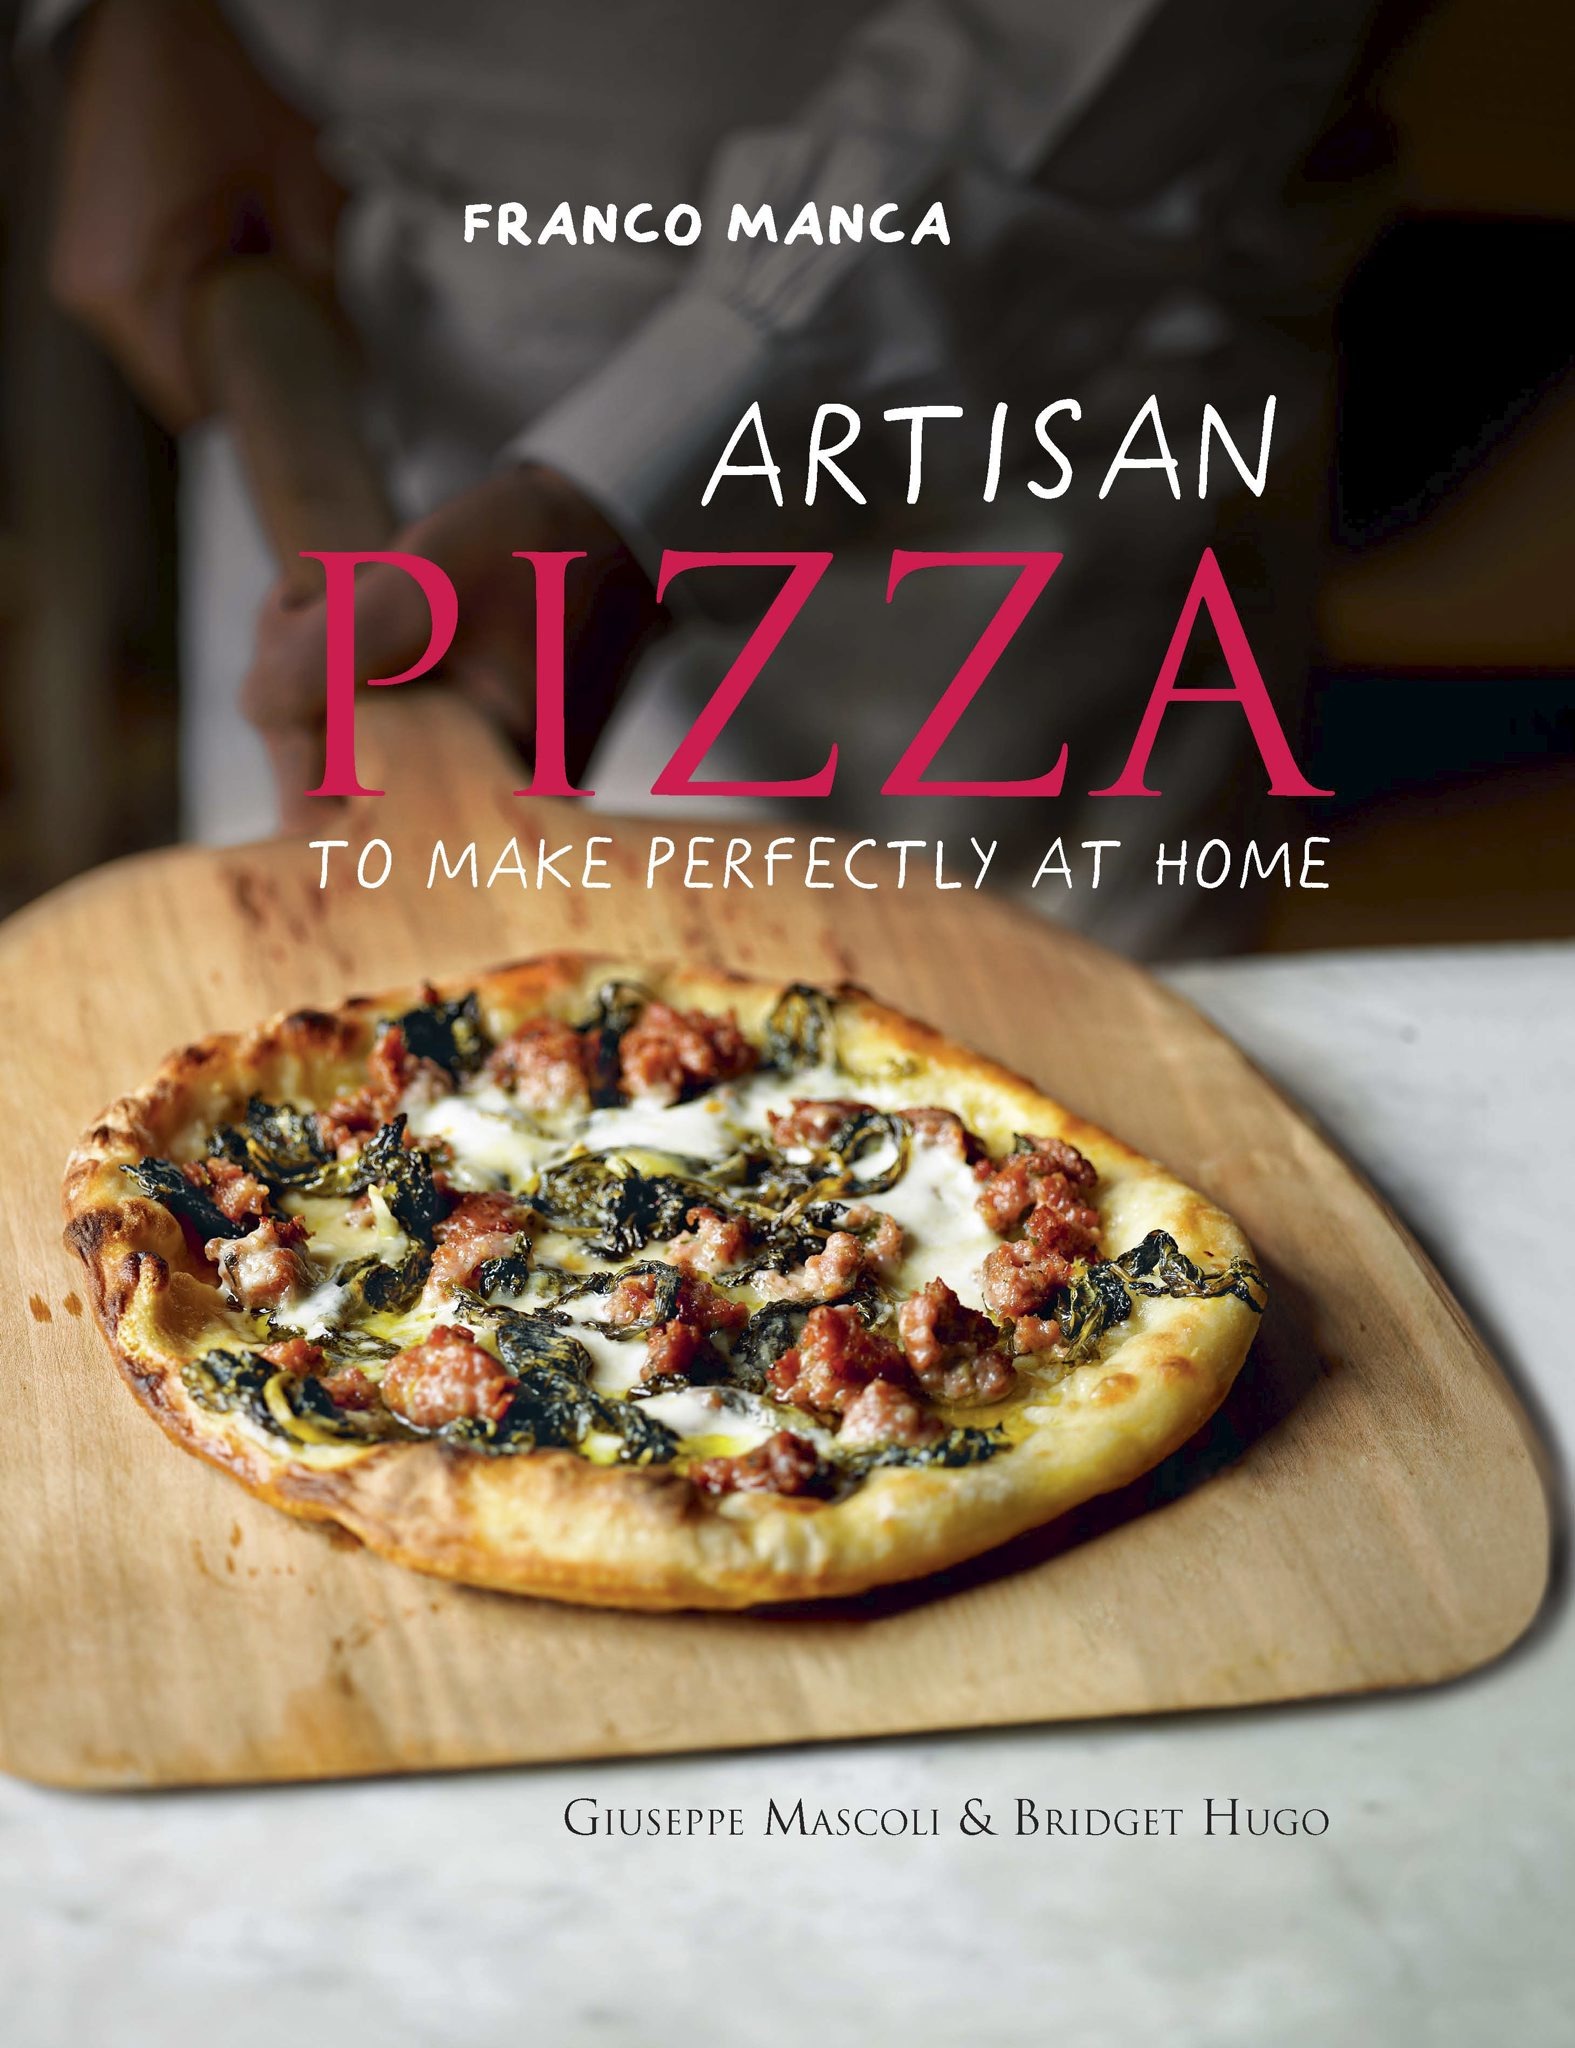 'Franco Manca: Artisan Pizza' by Giuseppe Mascoli and Bridget Hugo